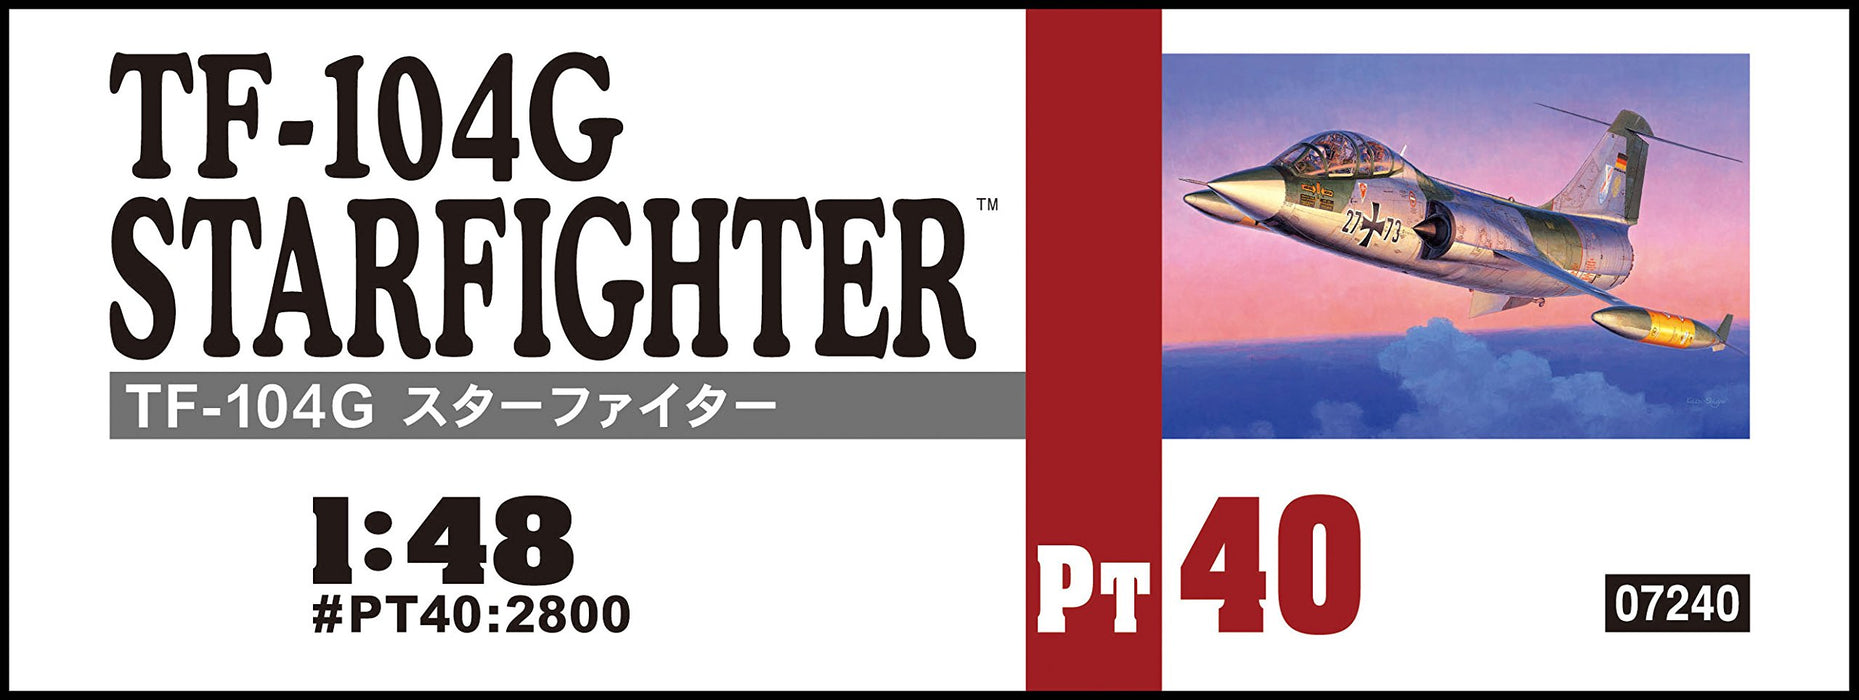 HASEGAWA Pt40 Tf-104G Starfighter 1/48 Scale Kit